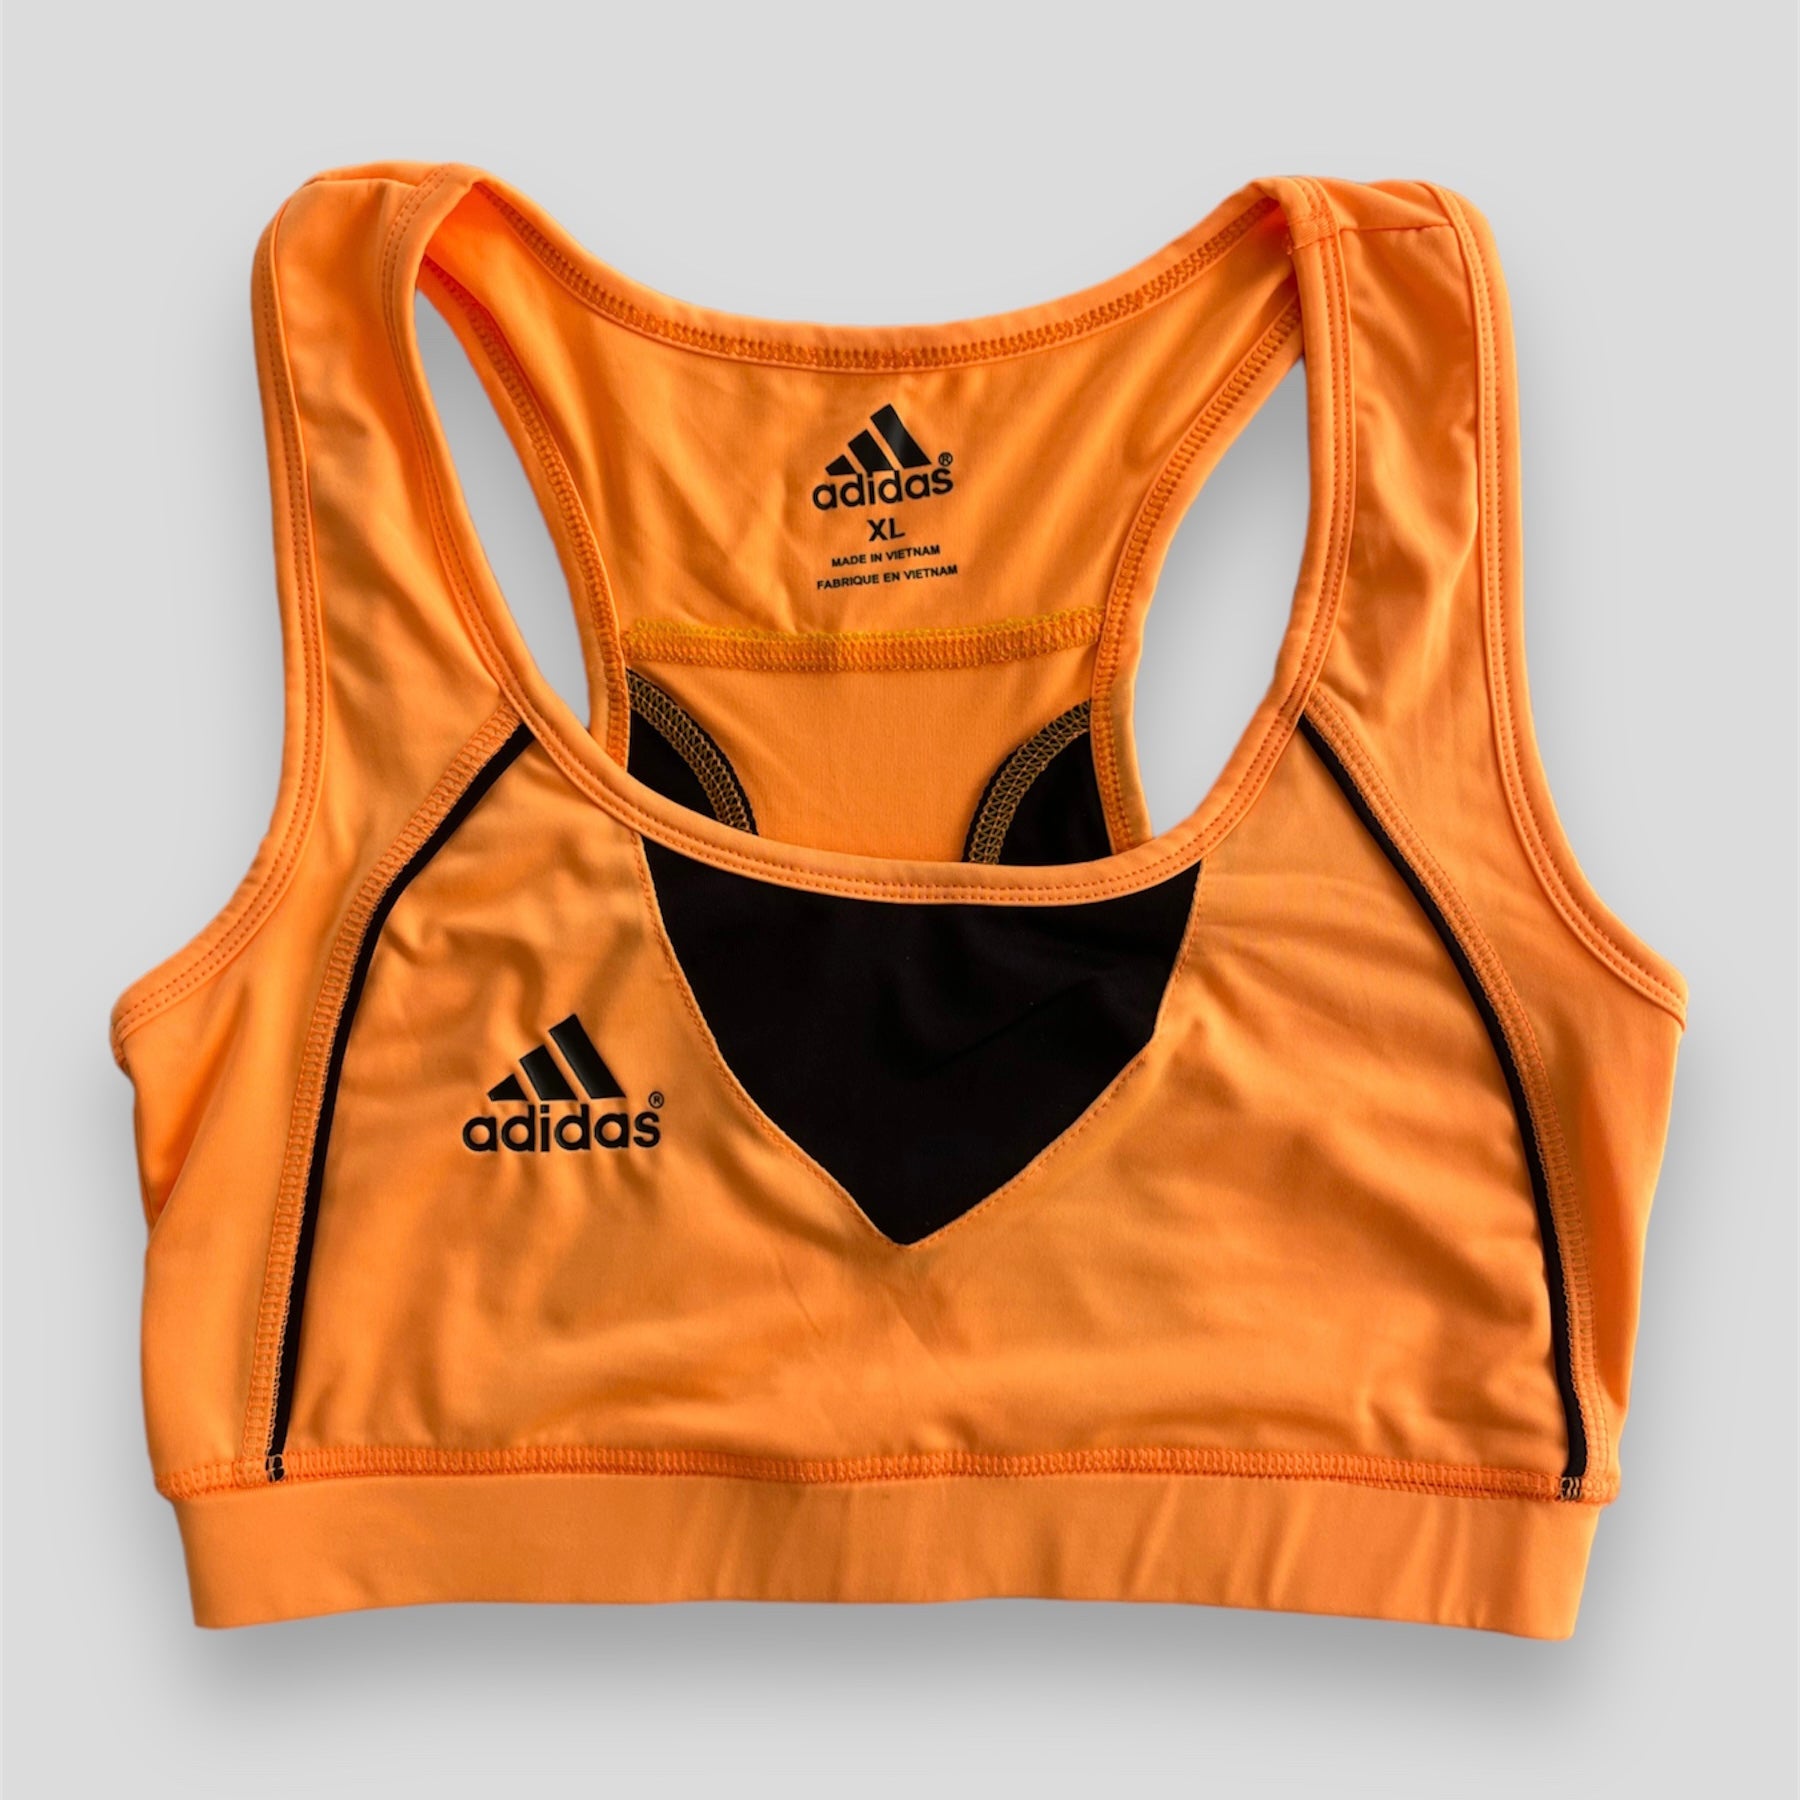 Adidas Neon Orange and Black Sports Bra - Small/Medium – Zoehify